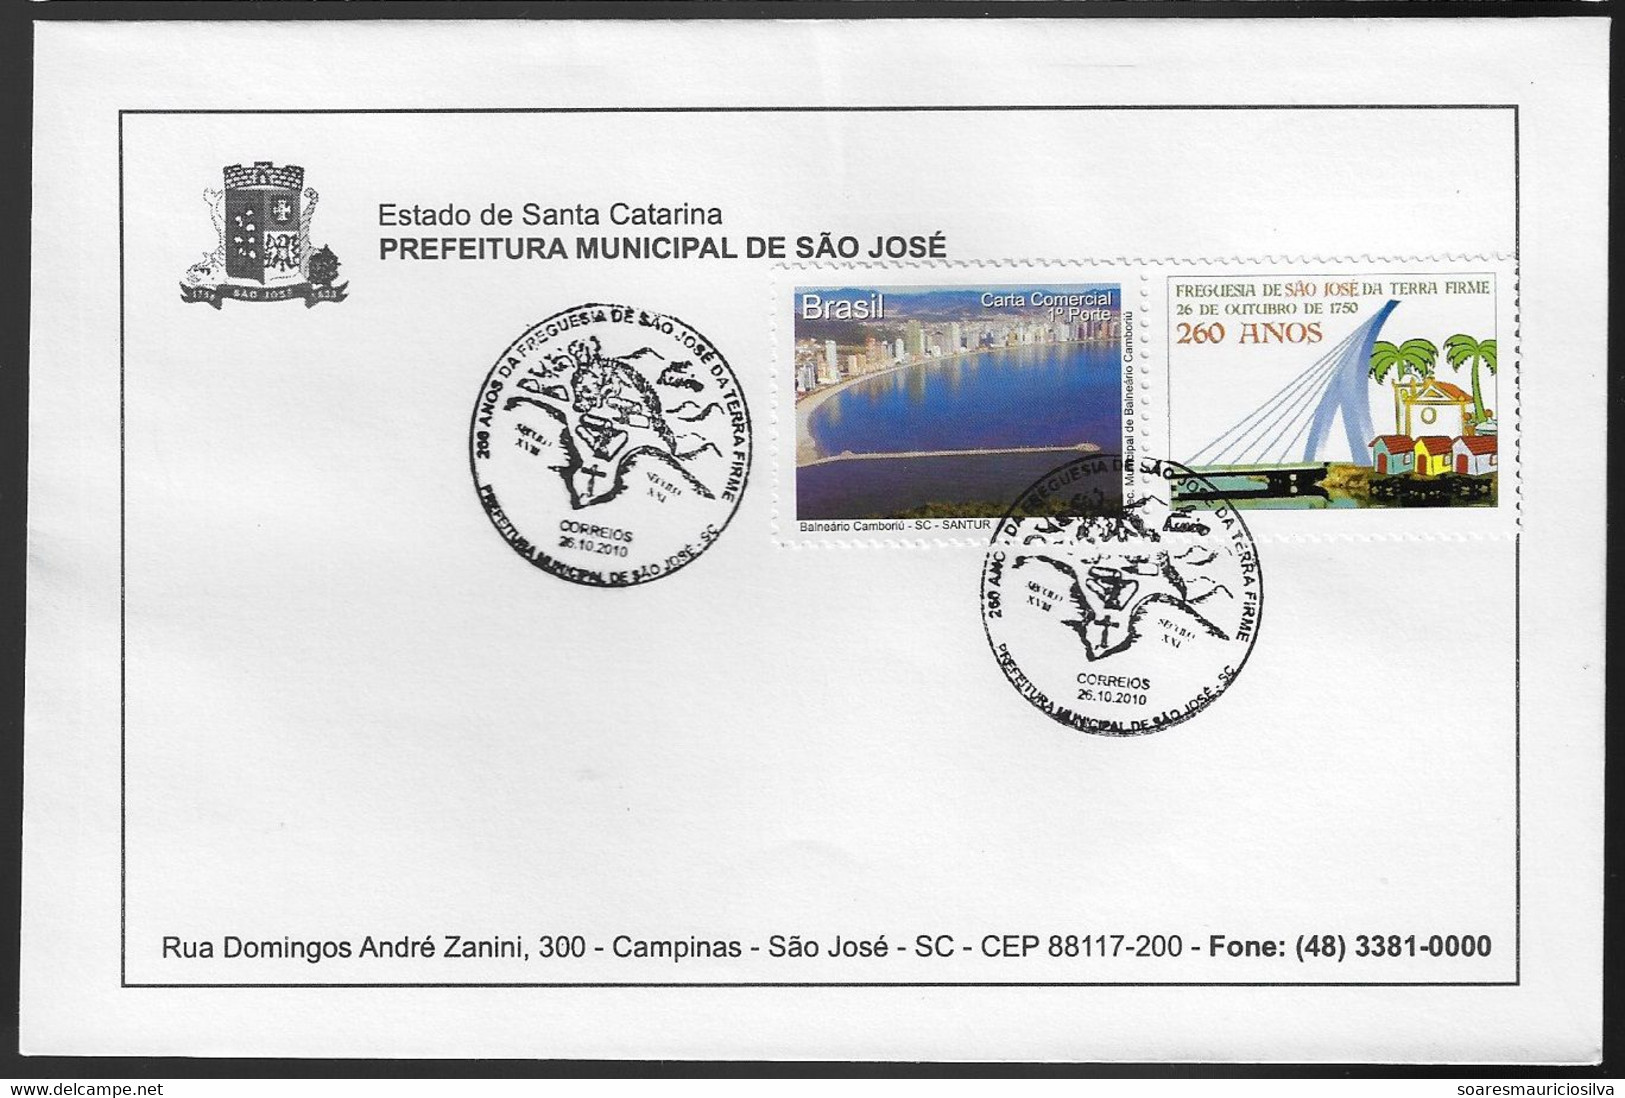 Brazil 2010 3 Cover With Personalized Stamp Turistical Sights of Santa Catarina 260 Years Parish São José Da Terra Firme - Gepersonaliseerde Postzegels